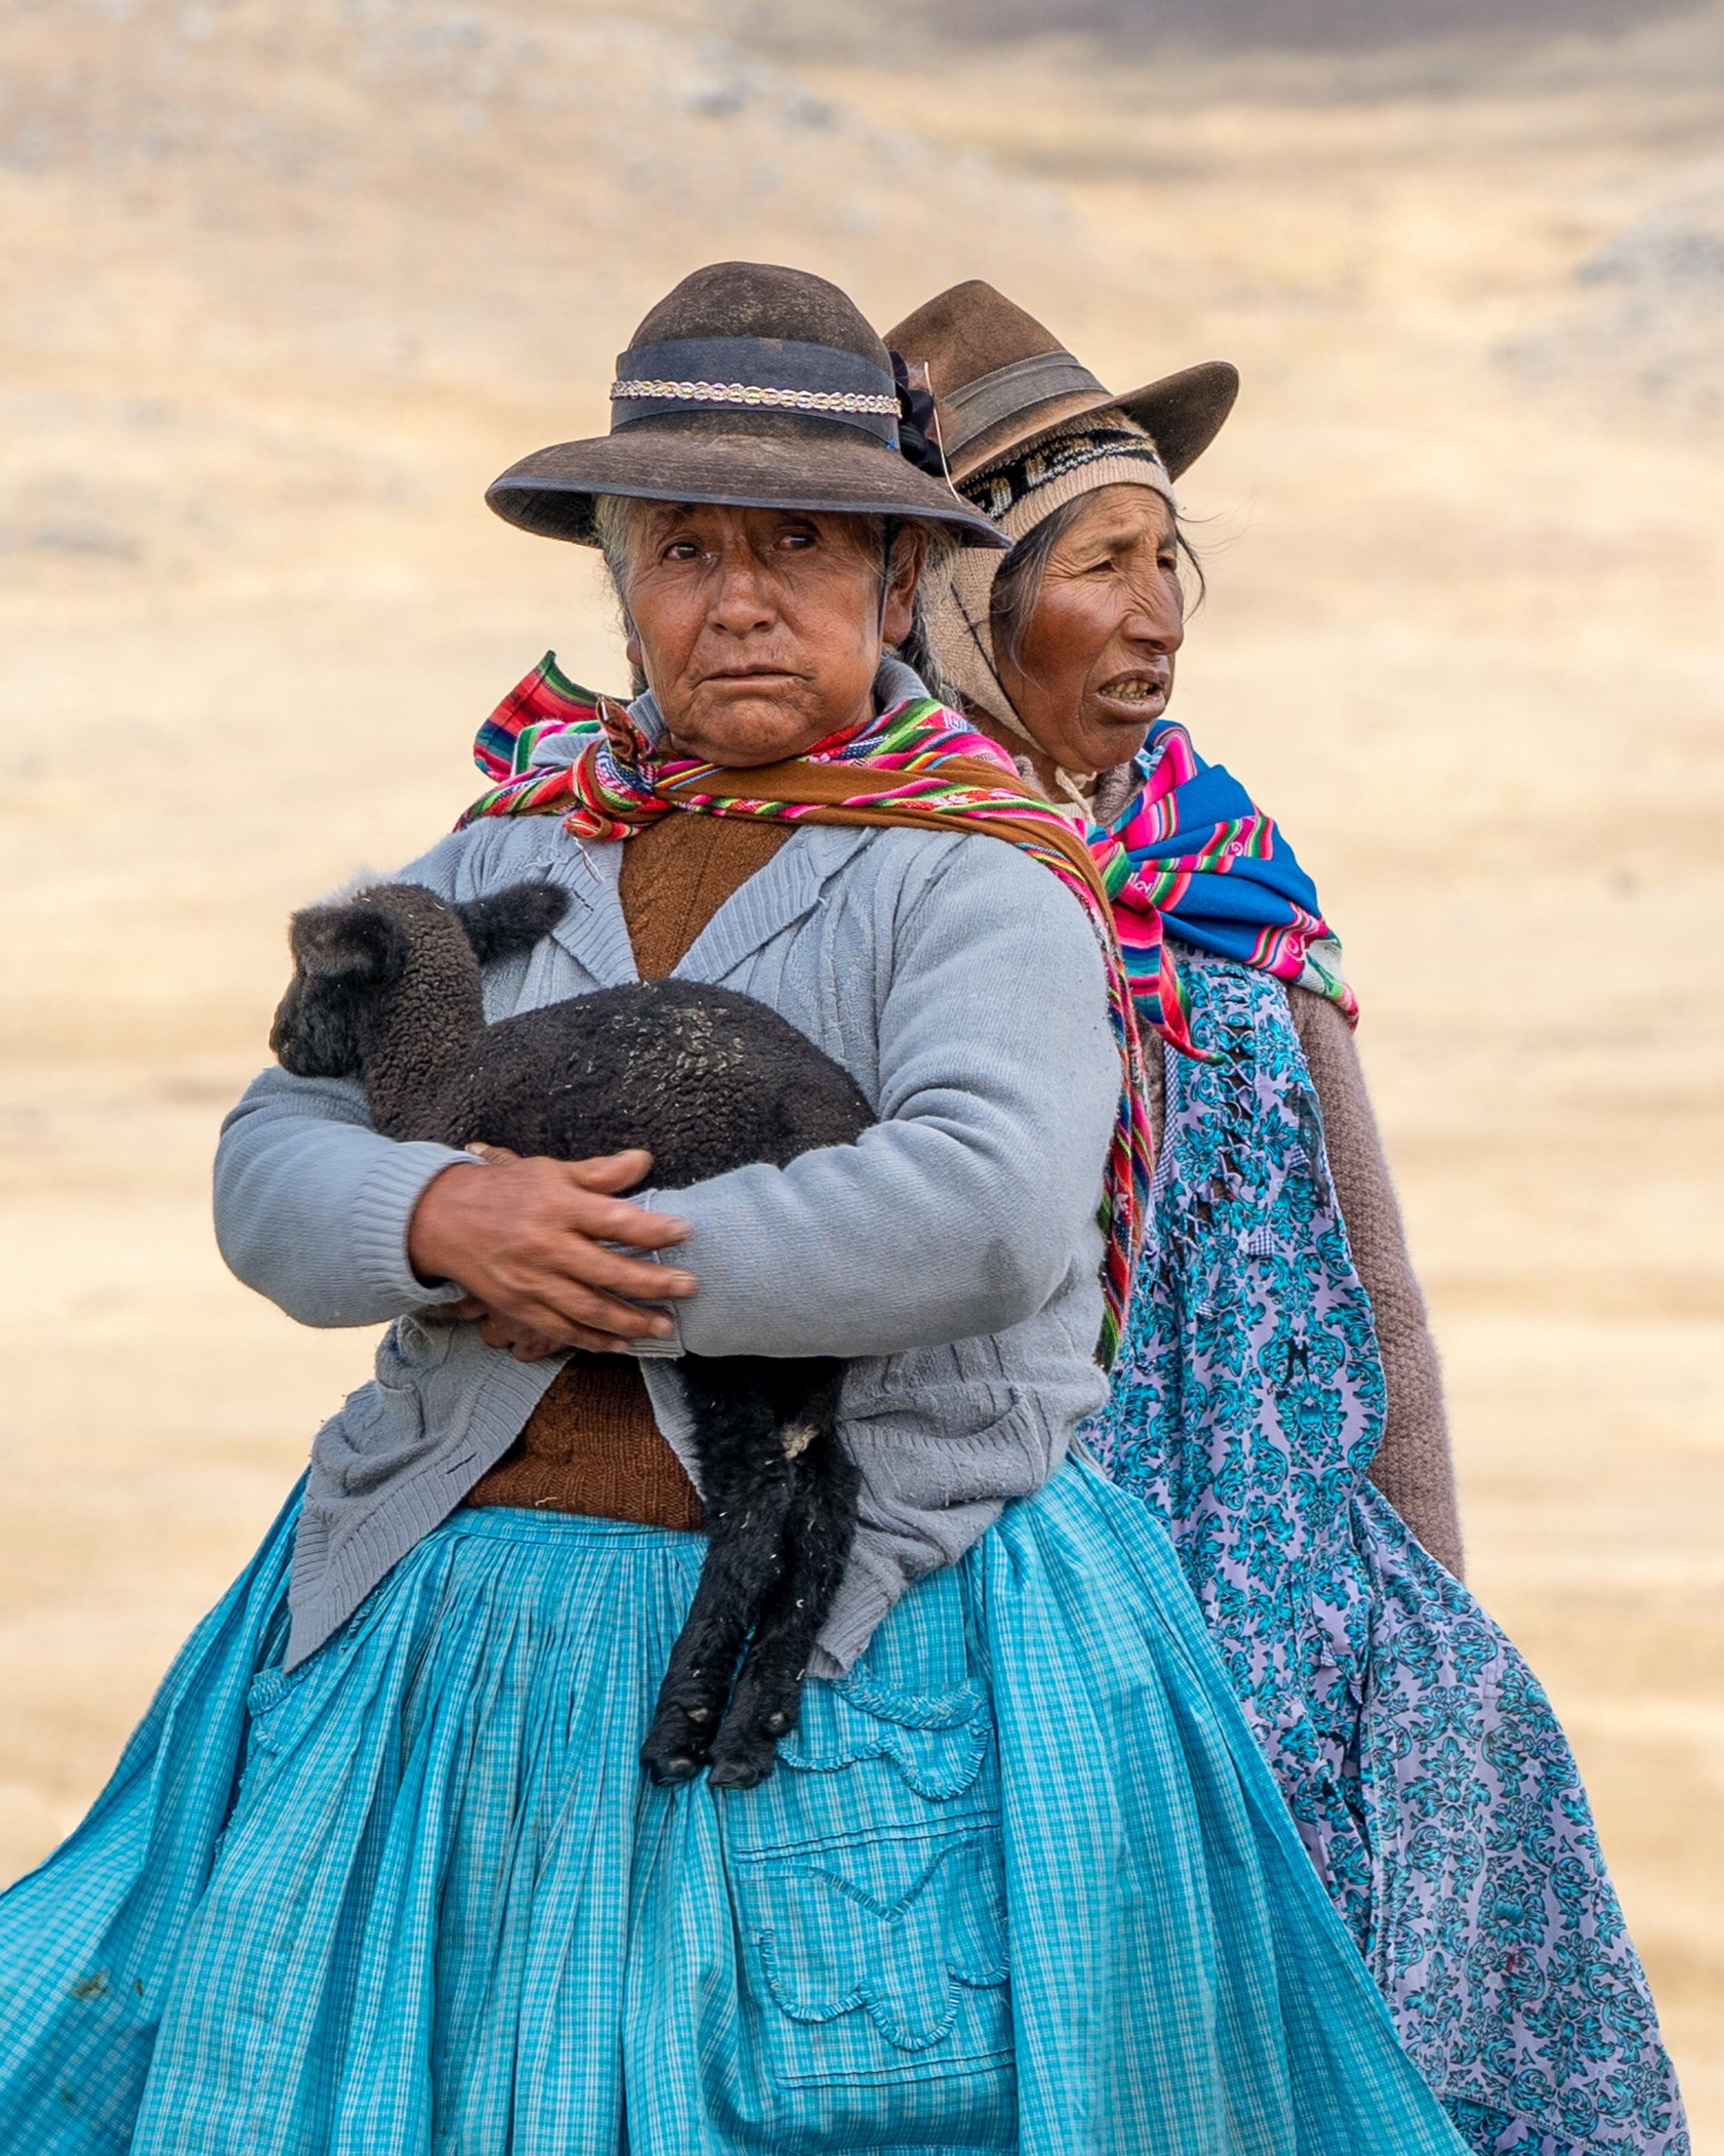 048_Wasim Muklashy Photography_Andes Mountains_Peru_Quechua Benefit_Picotani_Vicuna Chaccu.jpg